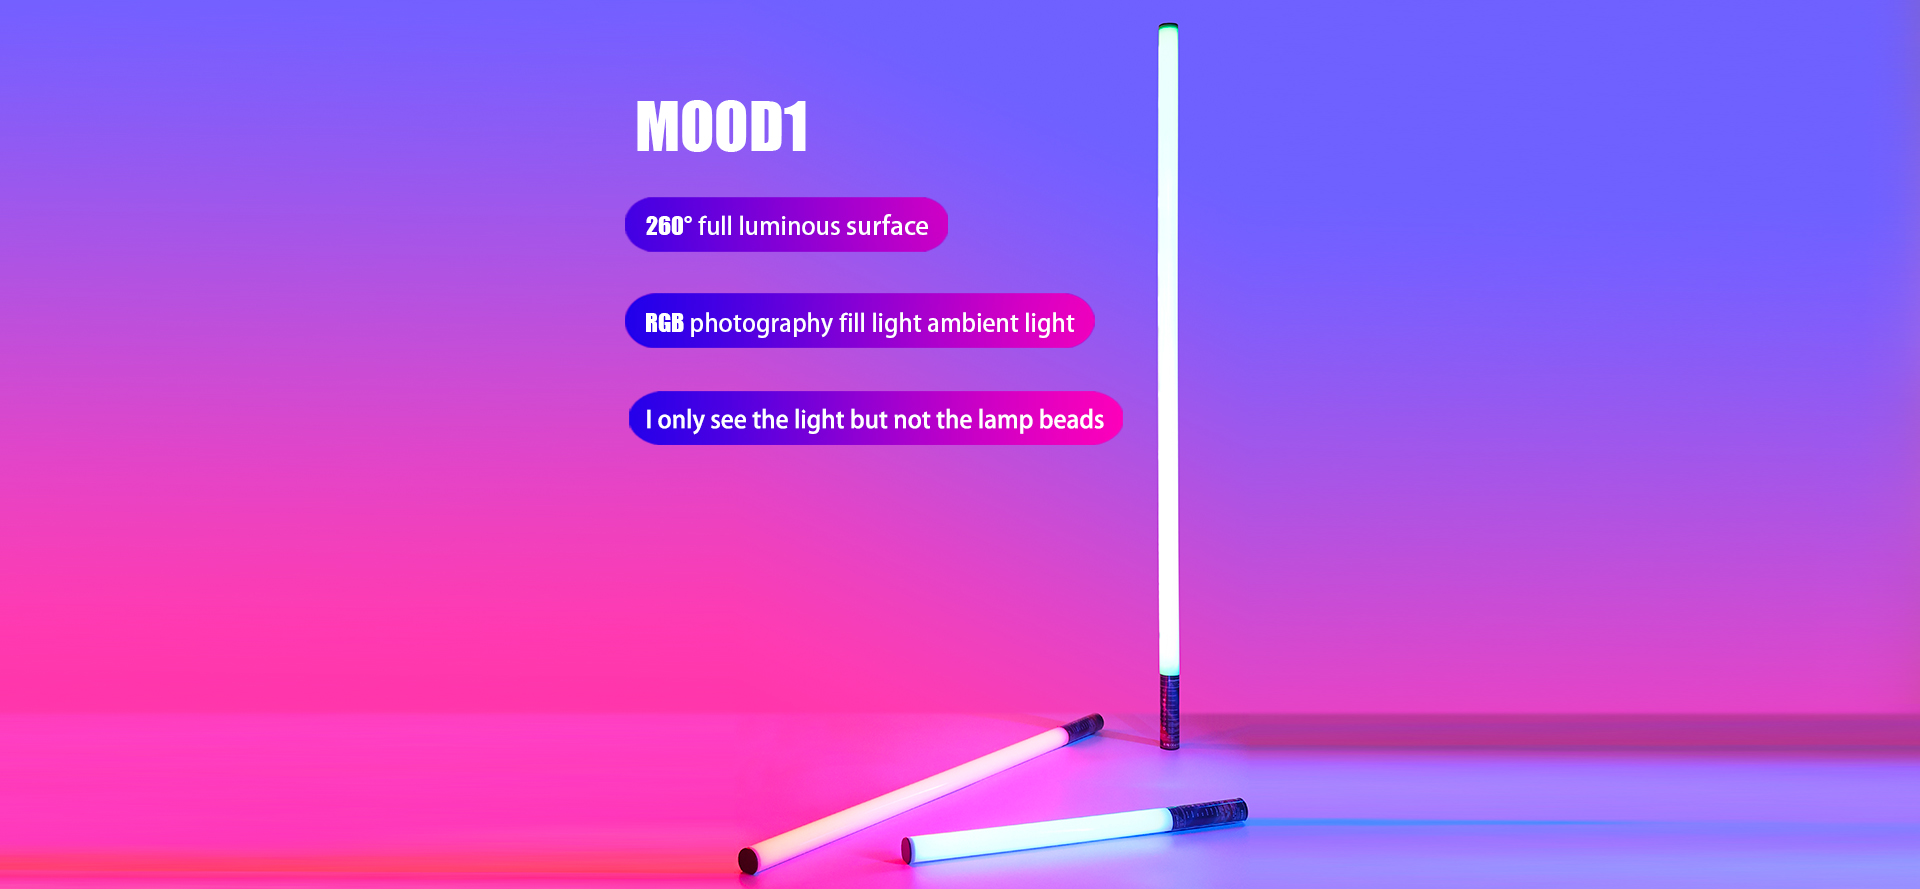 Mood1 LED atmosphere light